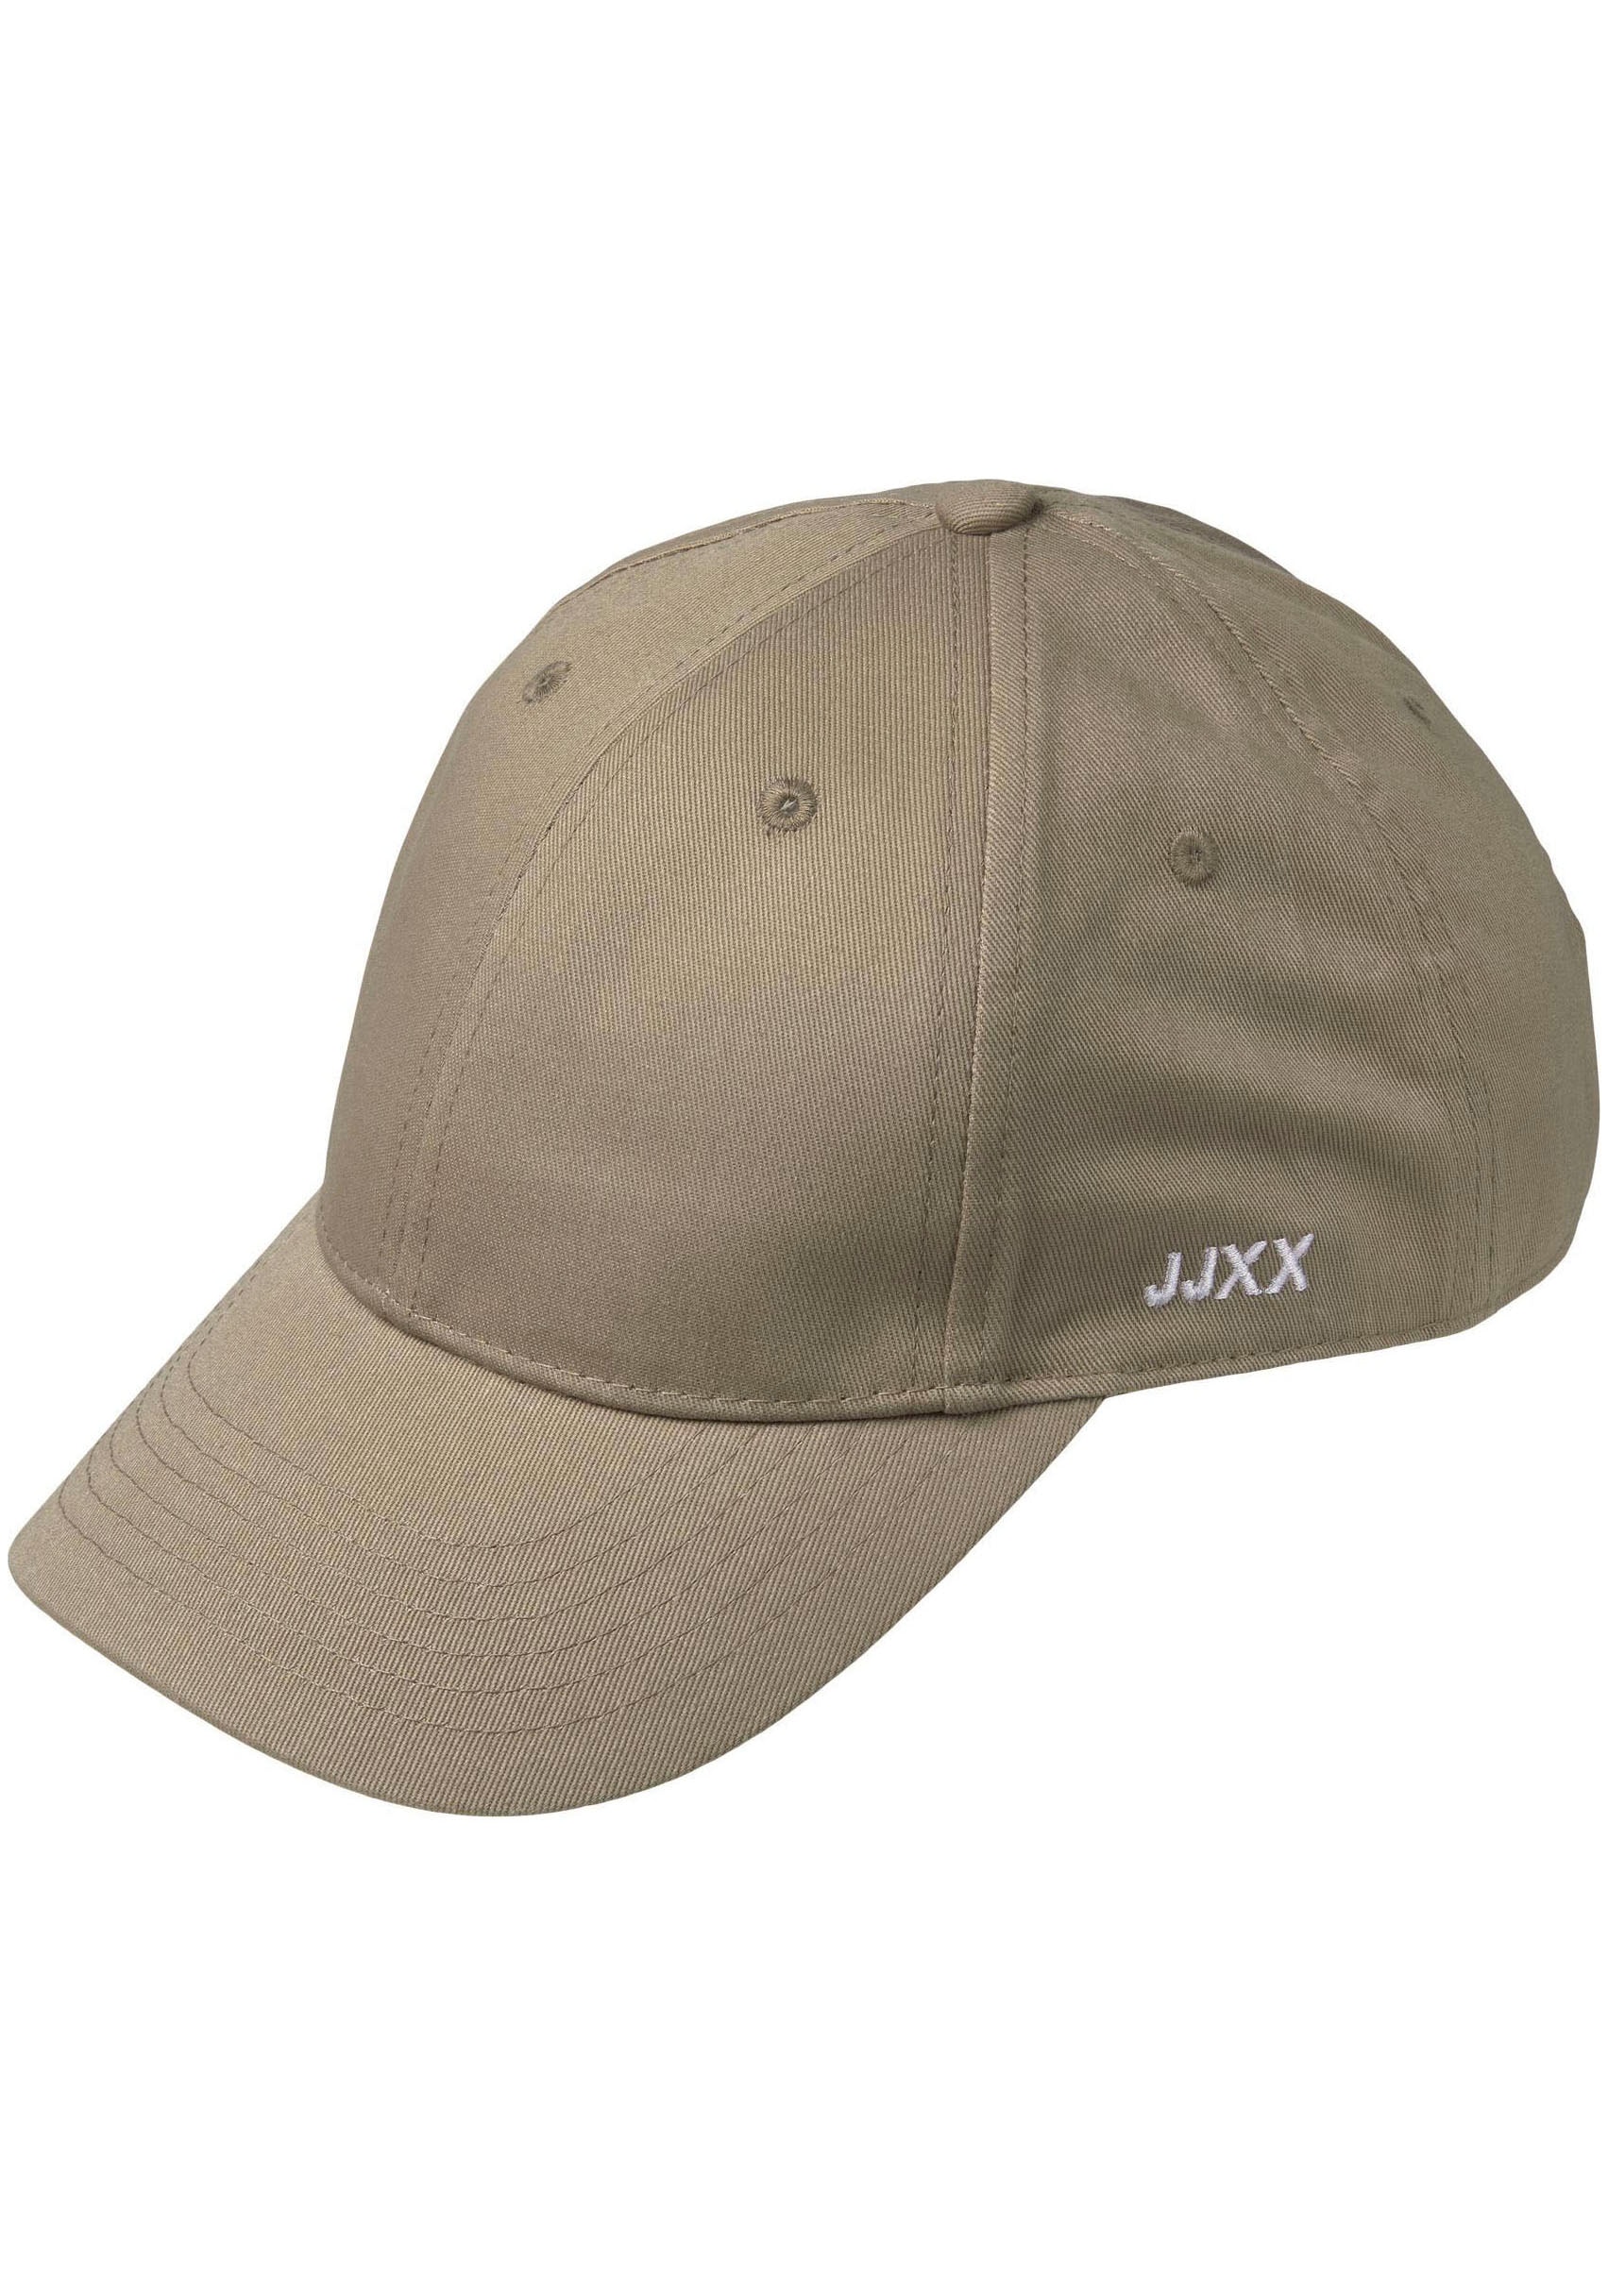 »JXBASIC JJXX Baseball CAP BASEBALL NOOS« ACC im | OTTO OTTO LOGO Shop kaufen Online Cap SMALL